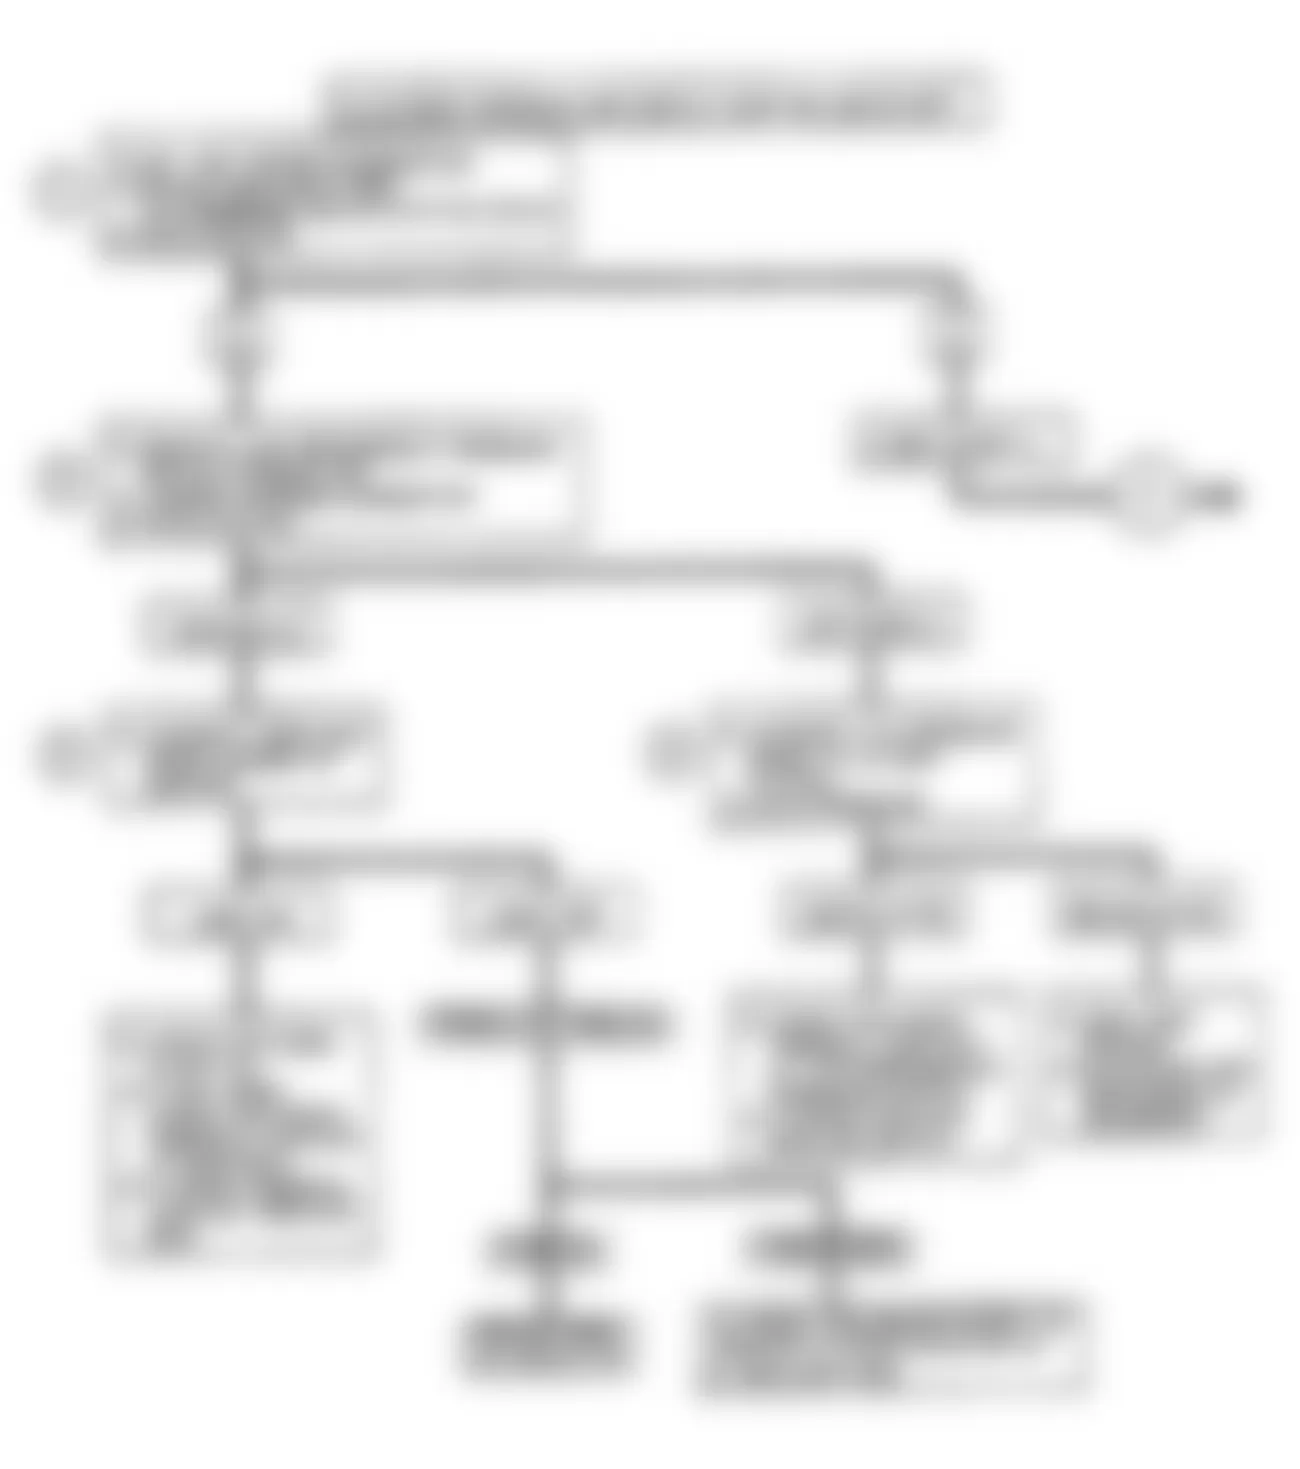 Buick Reatta 1990 - Component Locations -  Code B446, B447 & B448: Flow Chart Refrigerant System Problem (1 of 2)